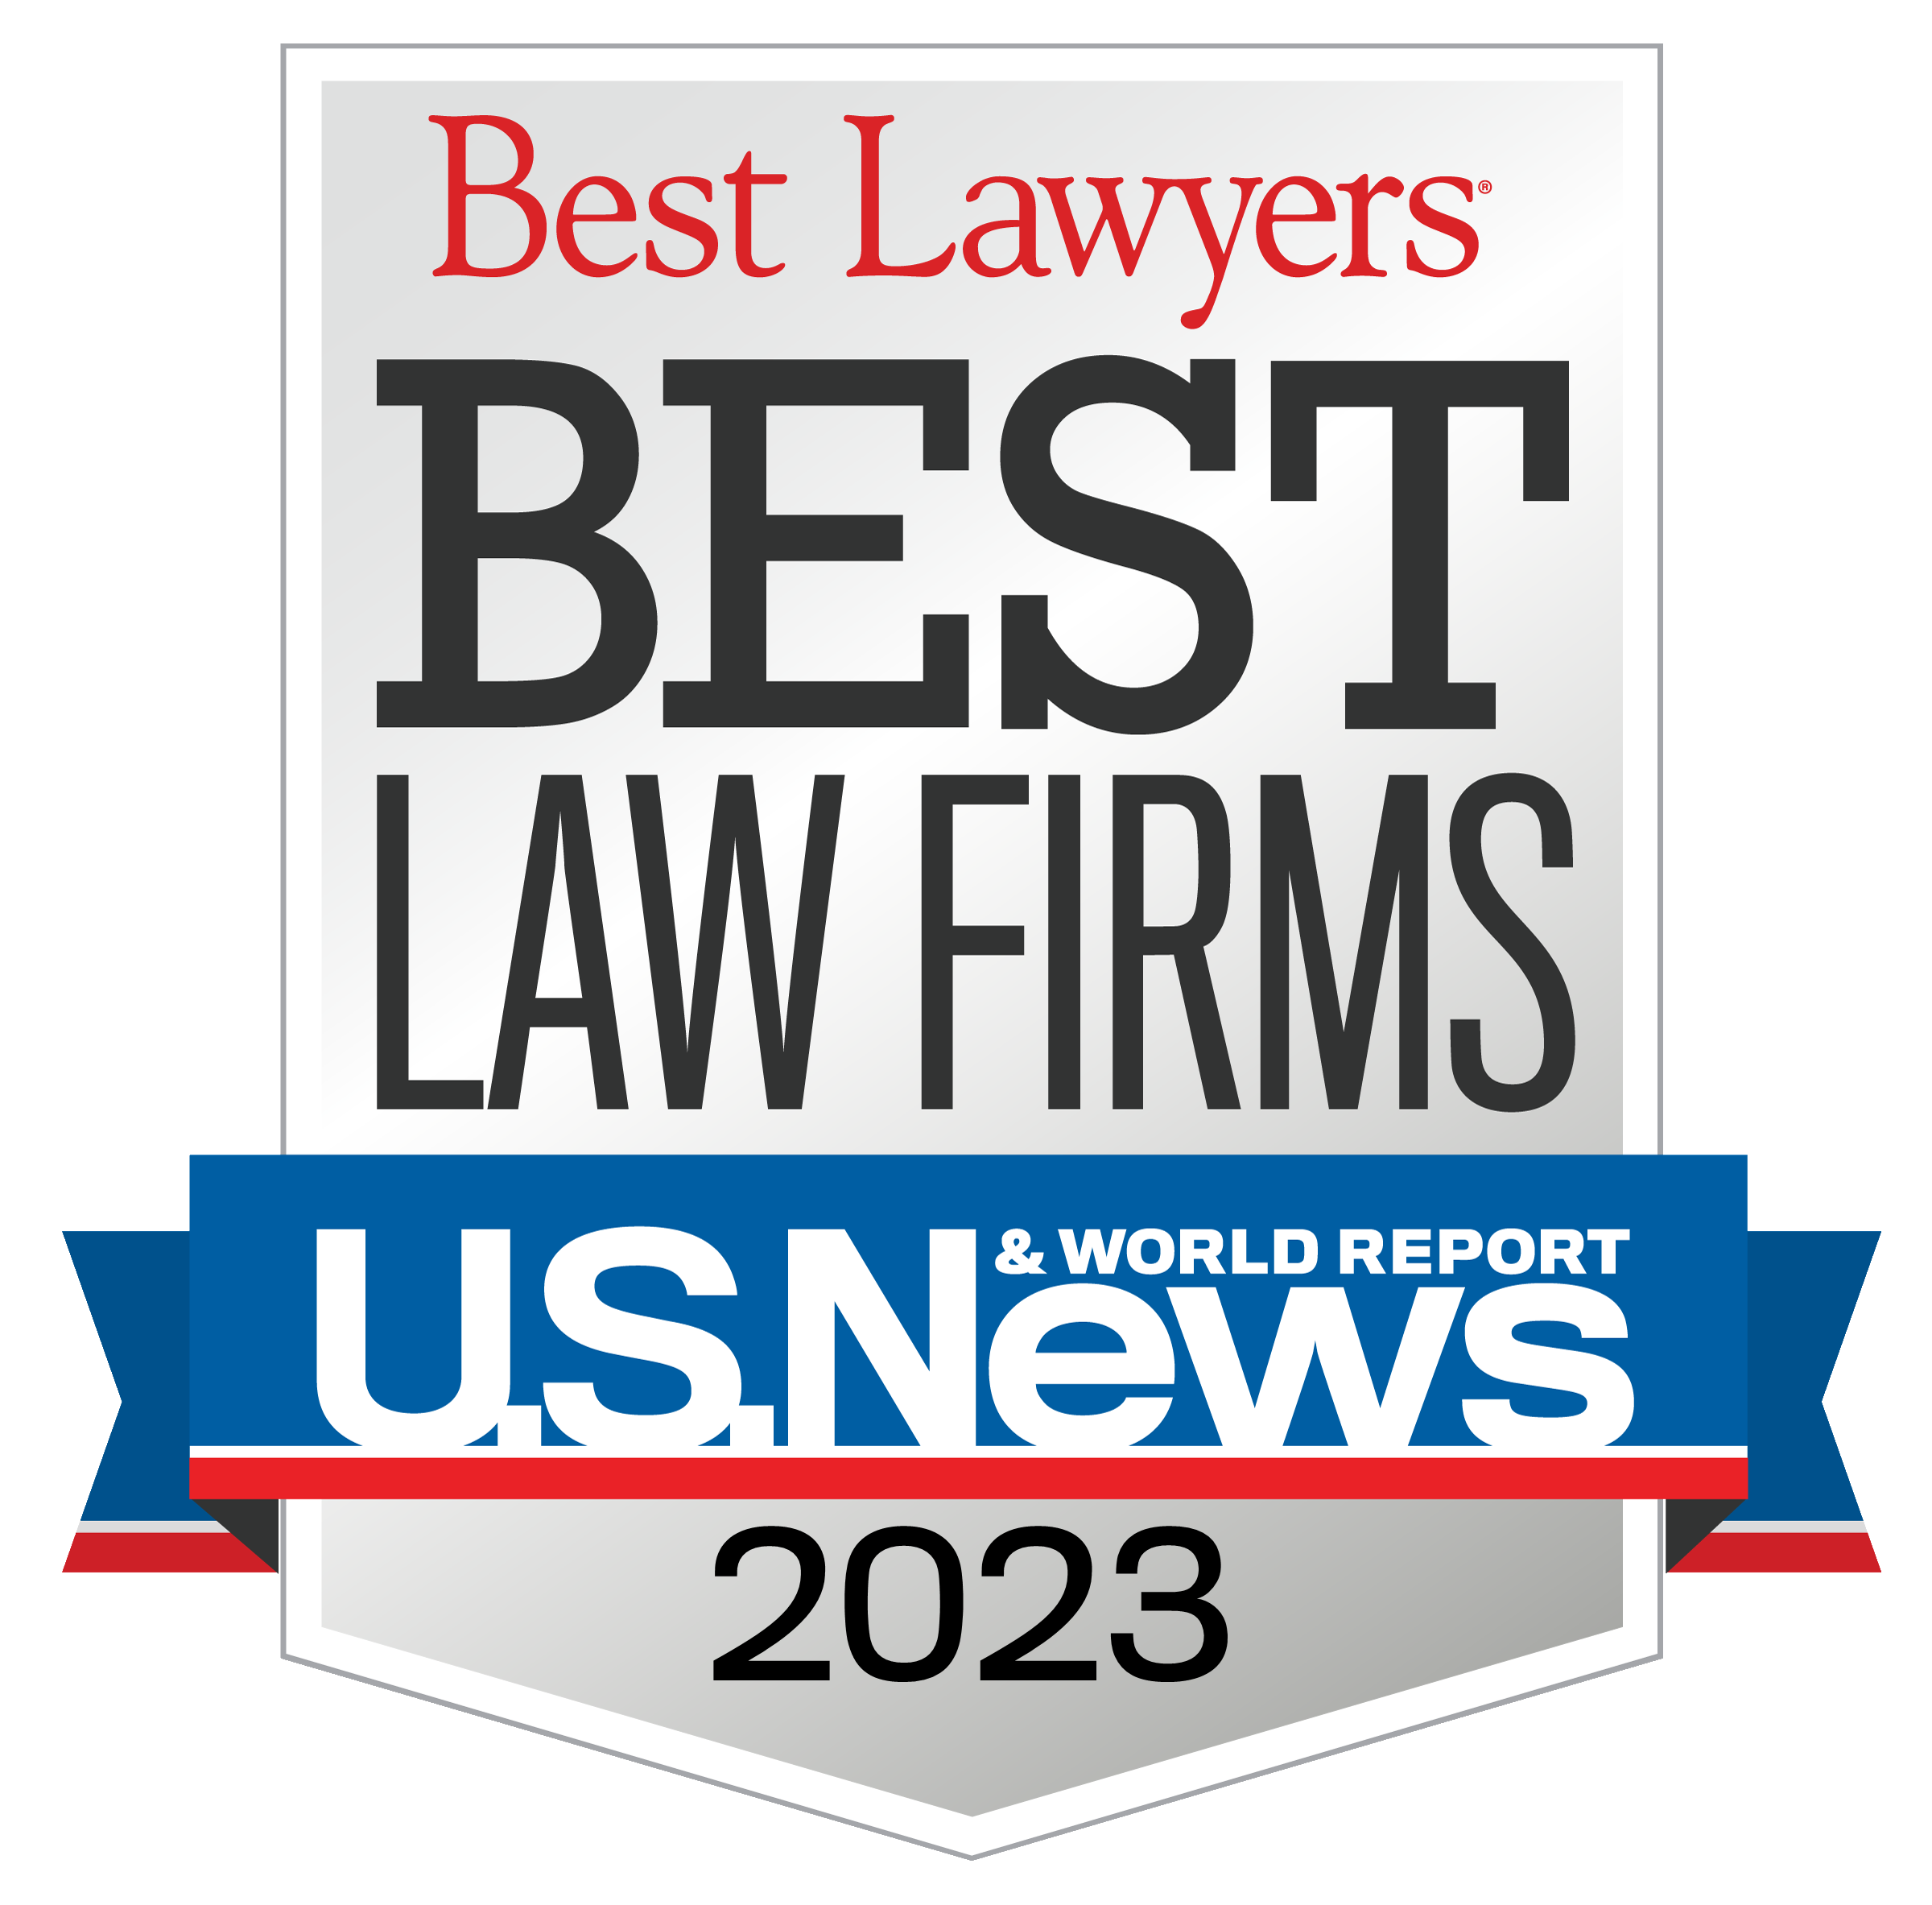 U.S. News Best Law Firms Award 2023